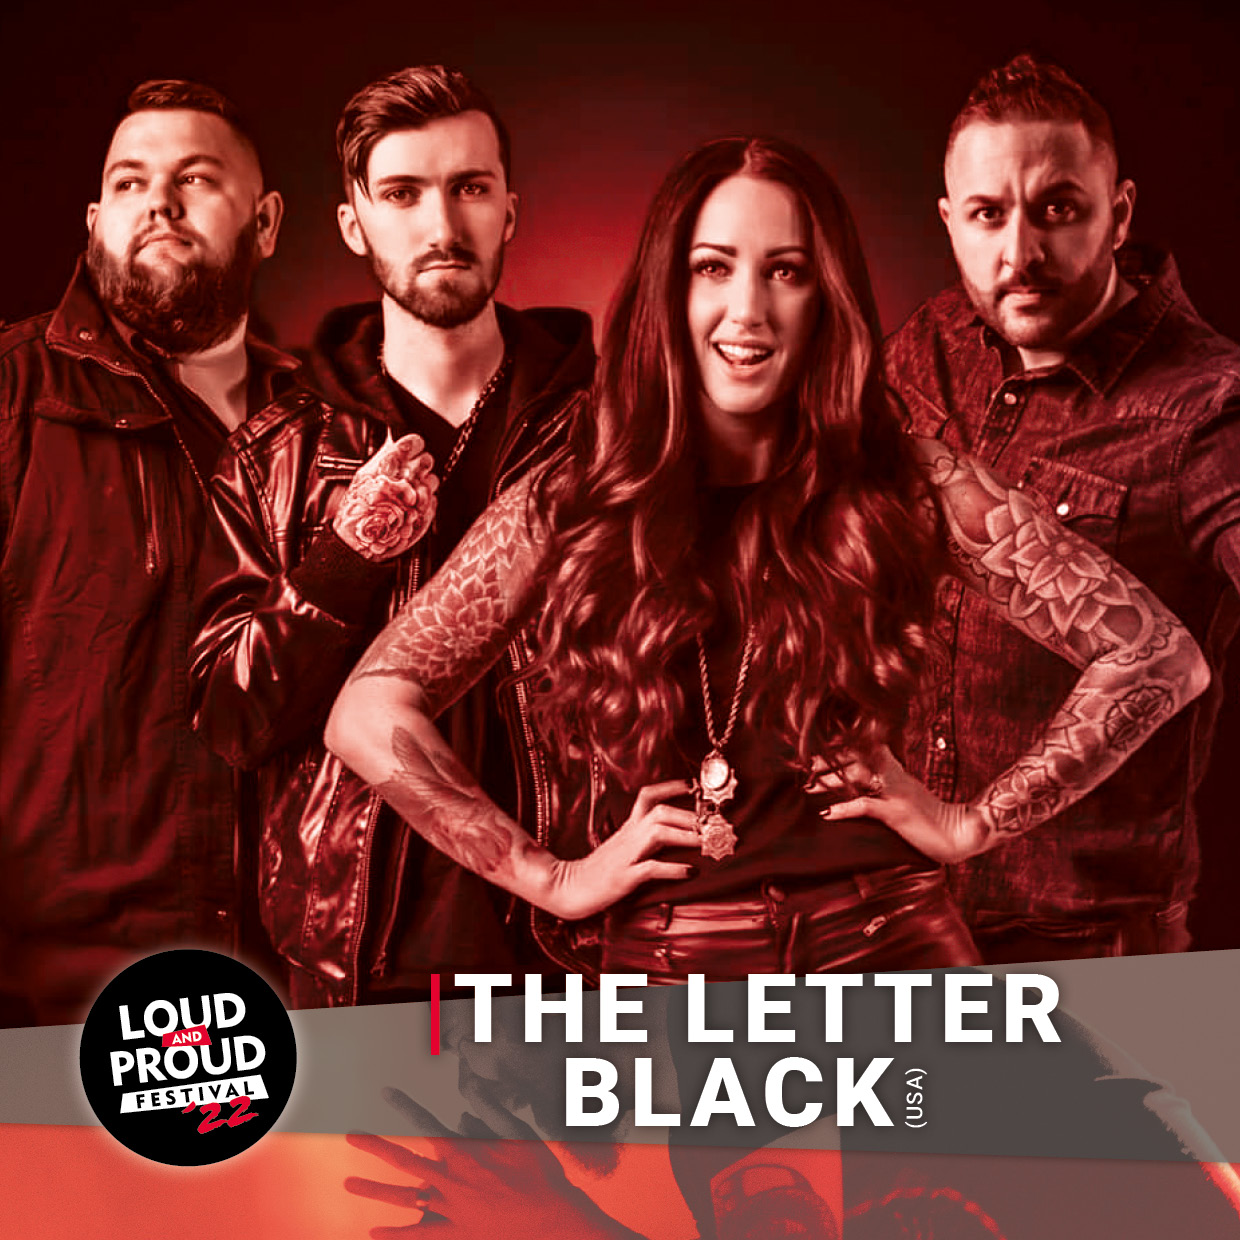 The Letter Black